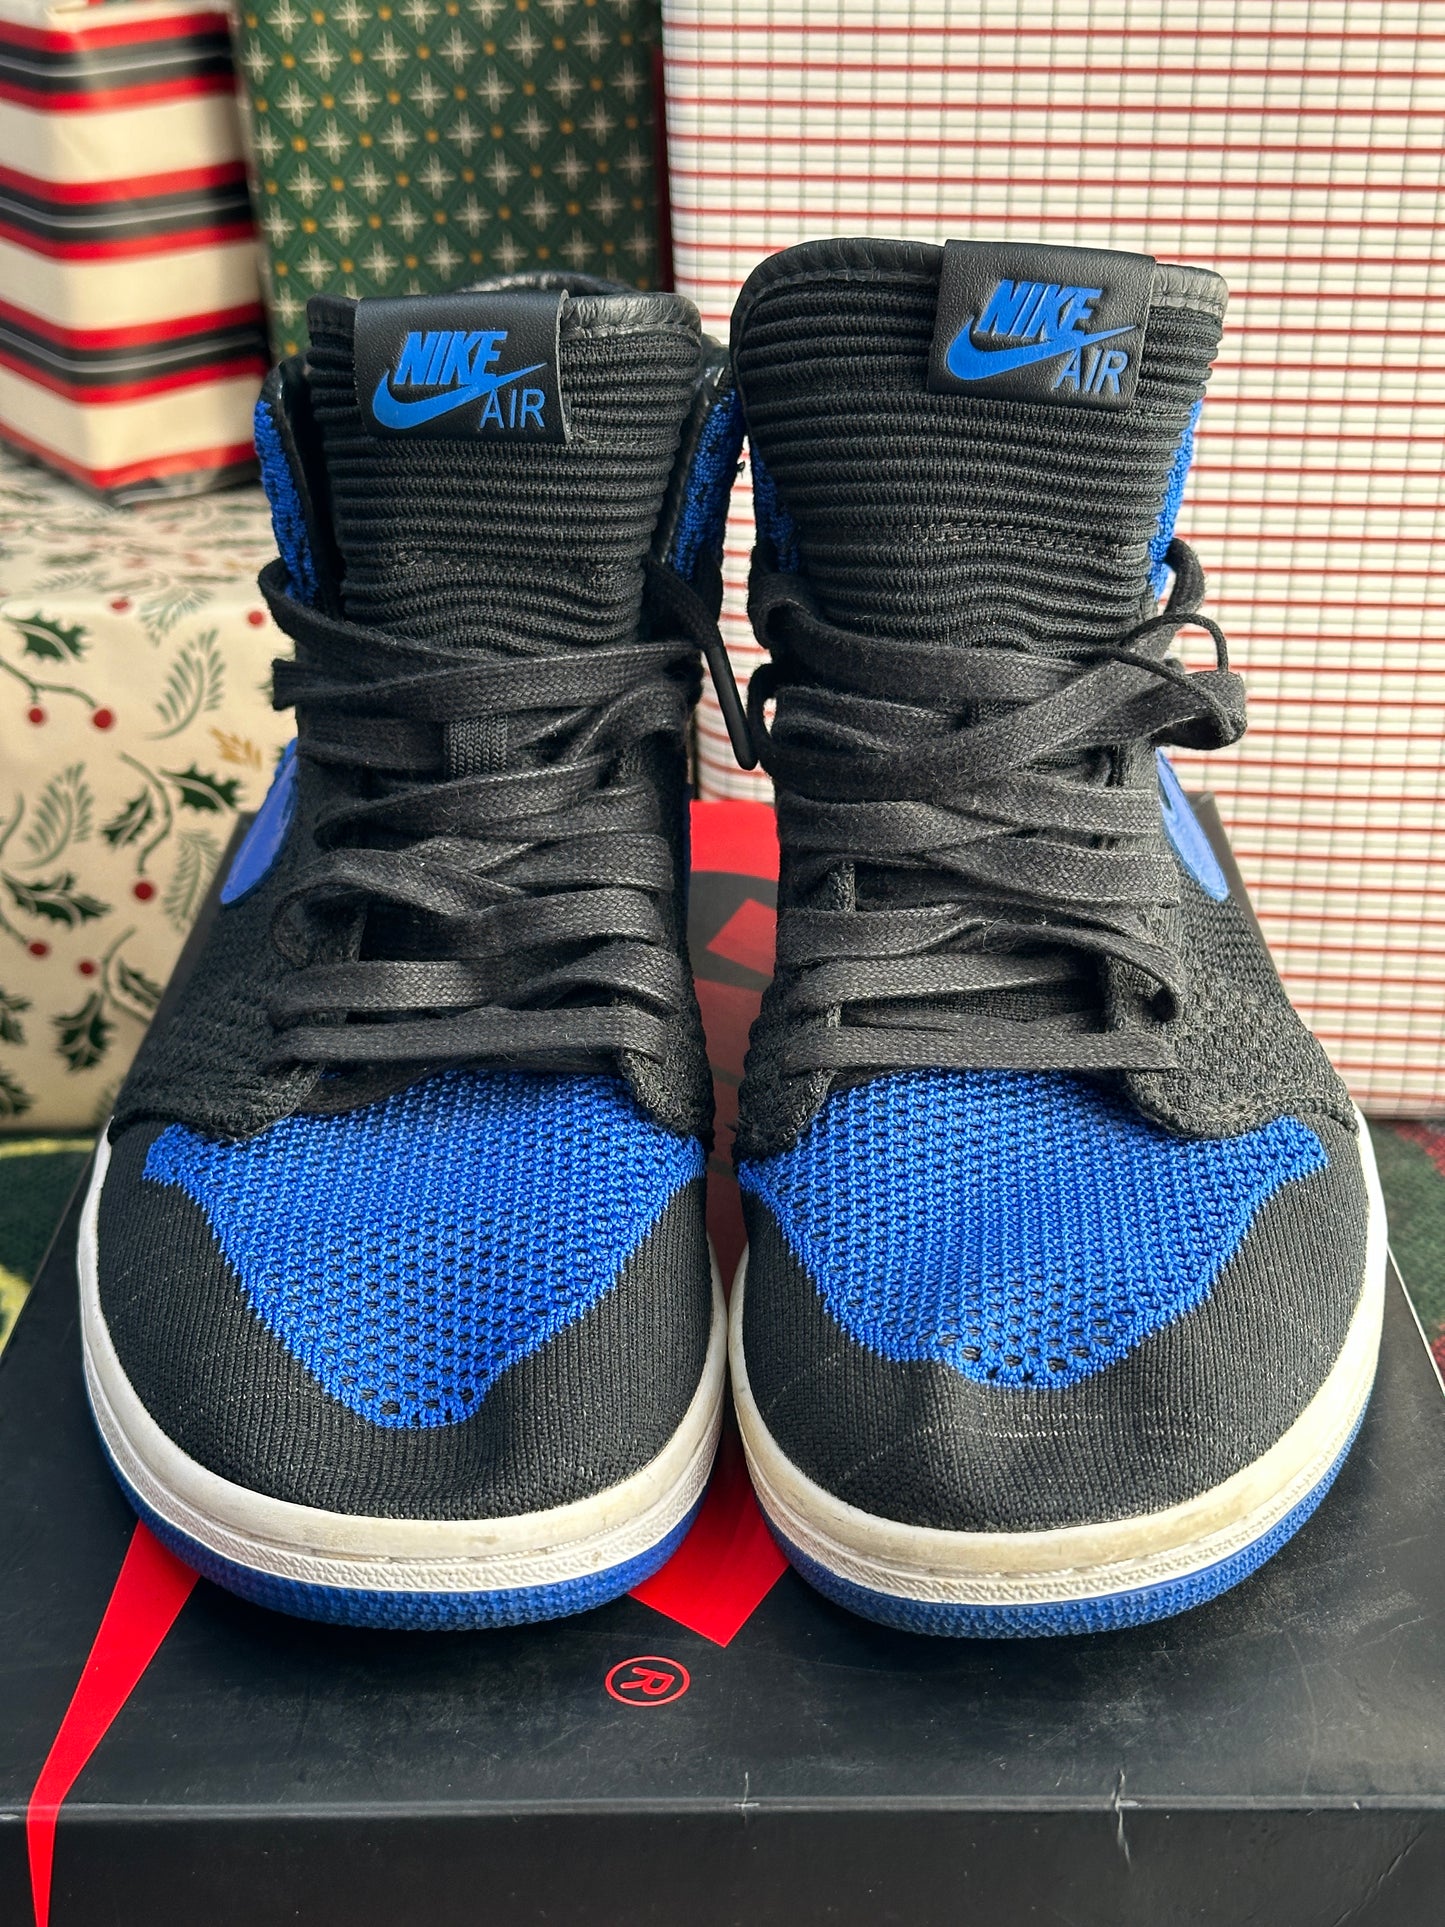 Nike Air Jordan 1 Retro High Flyknit Royal blue Shoes